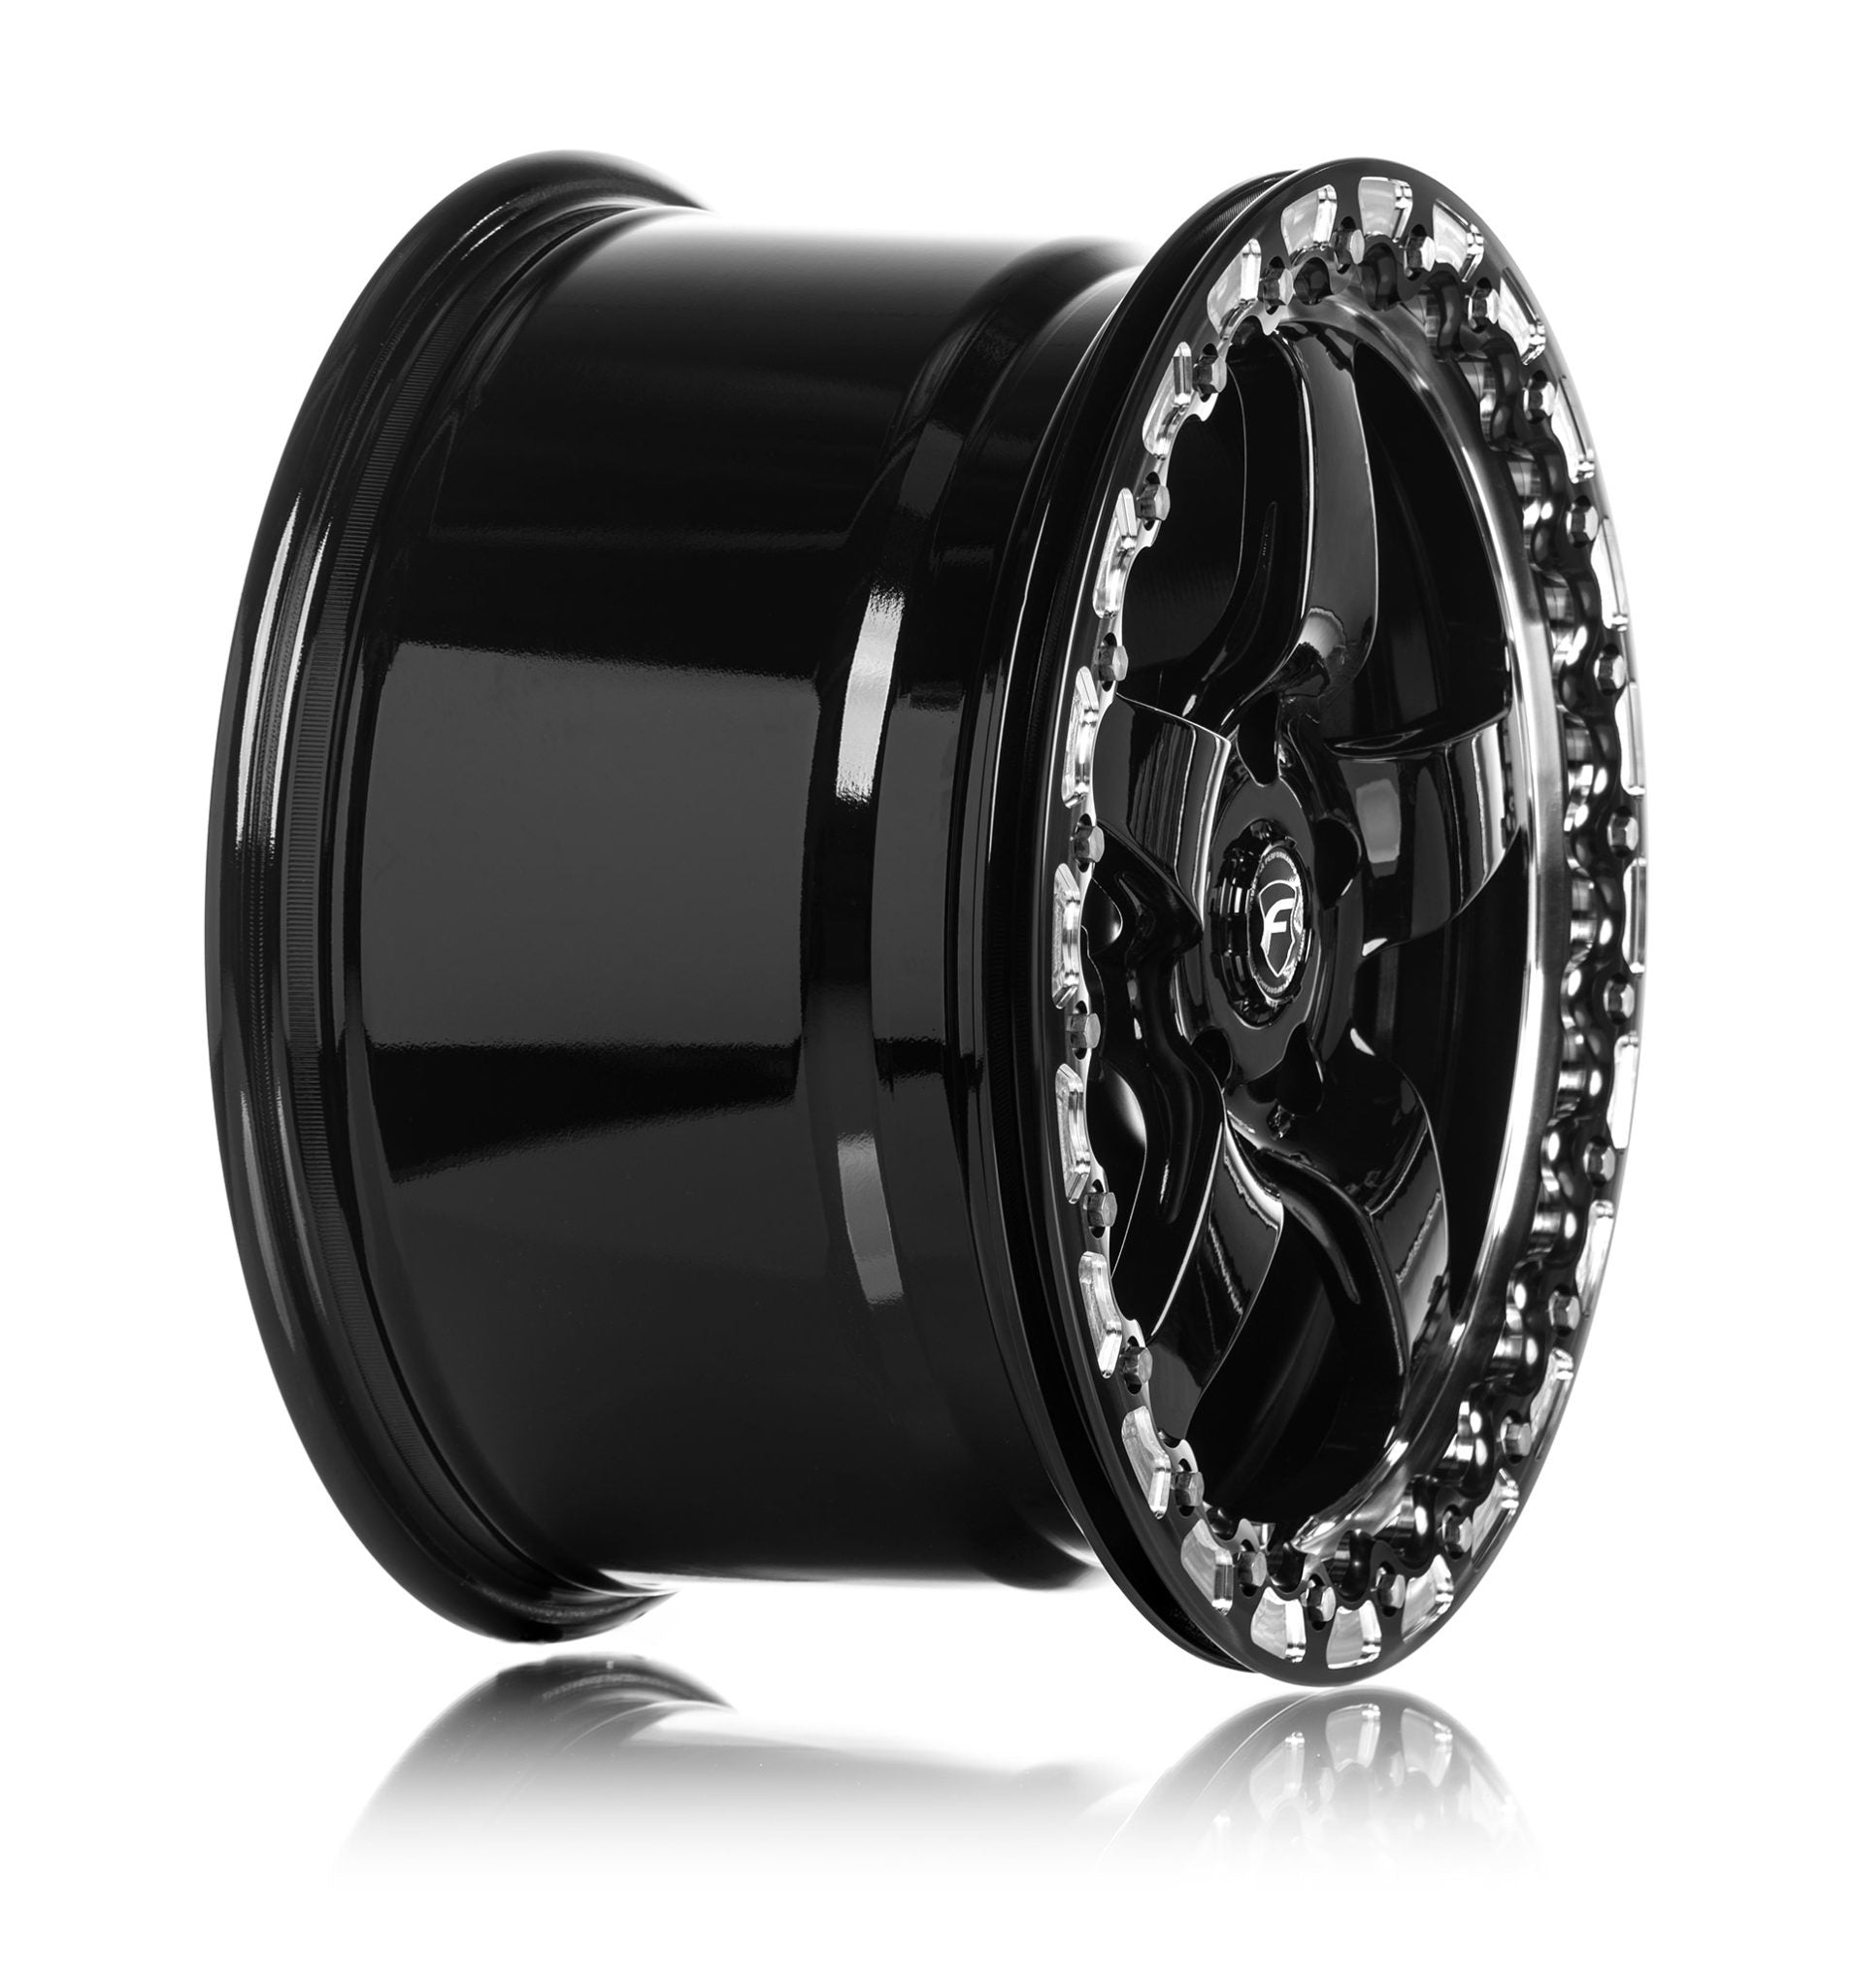 Forgestar D5 BEADLOCK Drag Racing Wheels - Gloss Black w/Machined Lip - 17X11 - Sold Individually - Motorsports LA